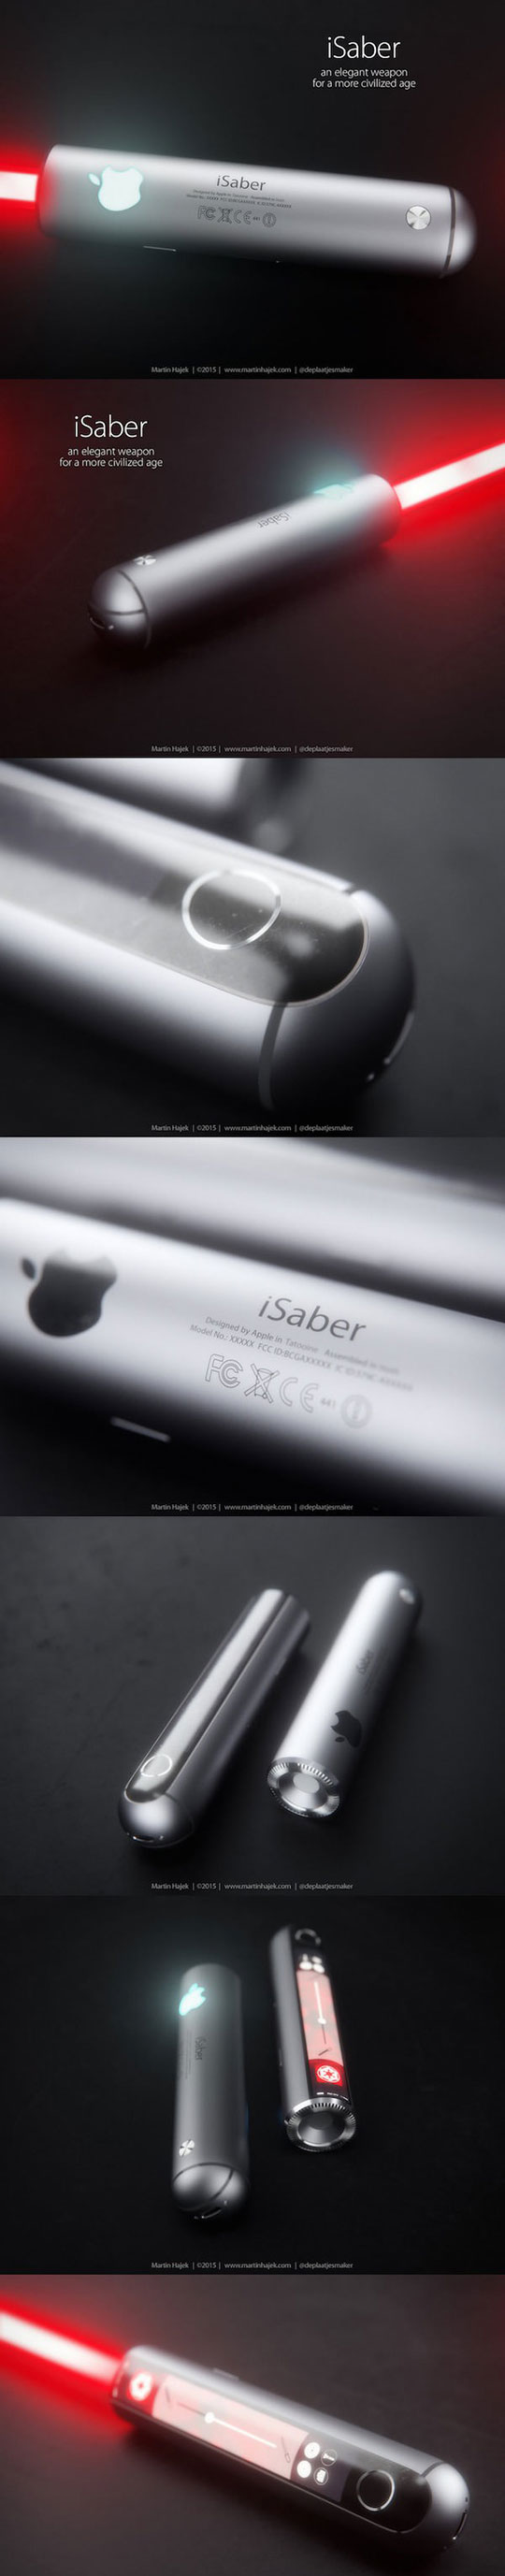 cool-iSaber-design-Apple-prototype